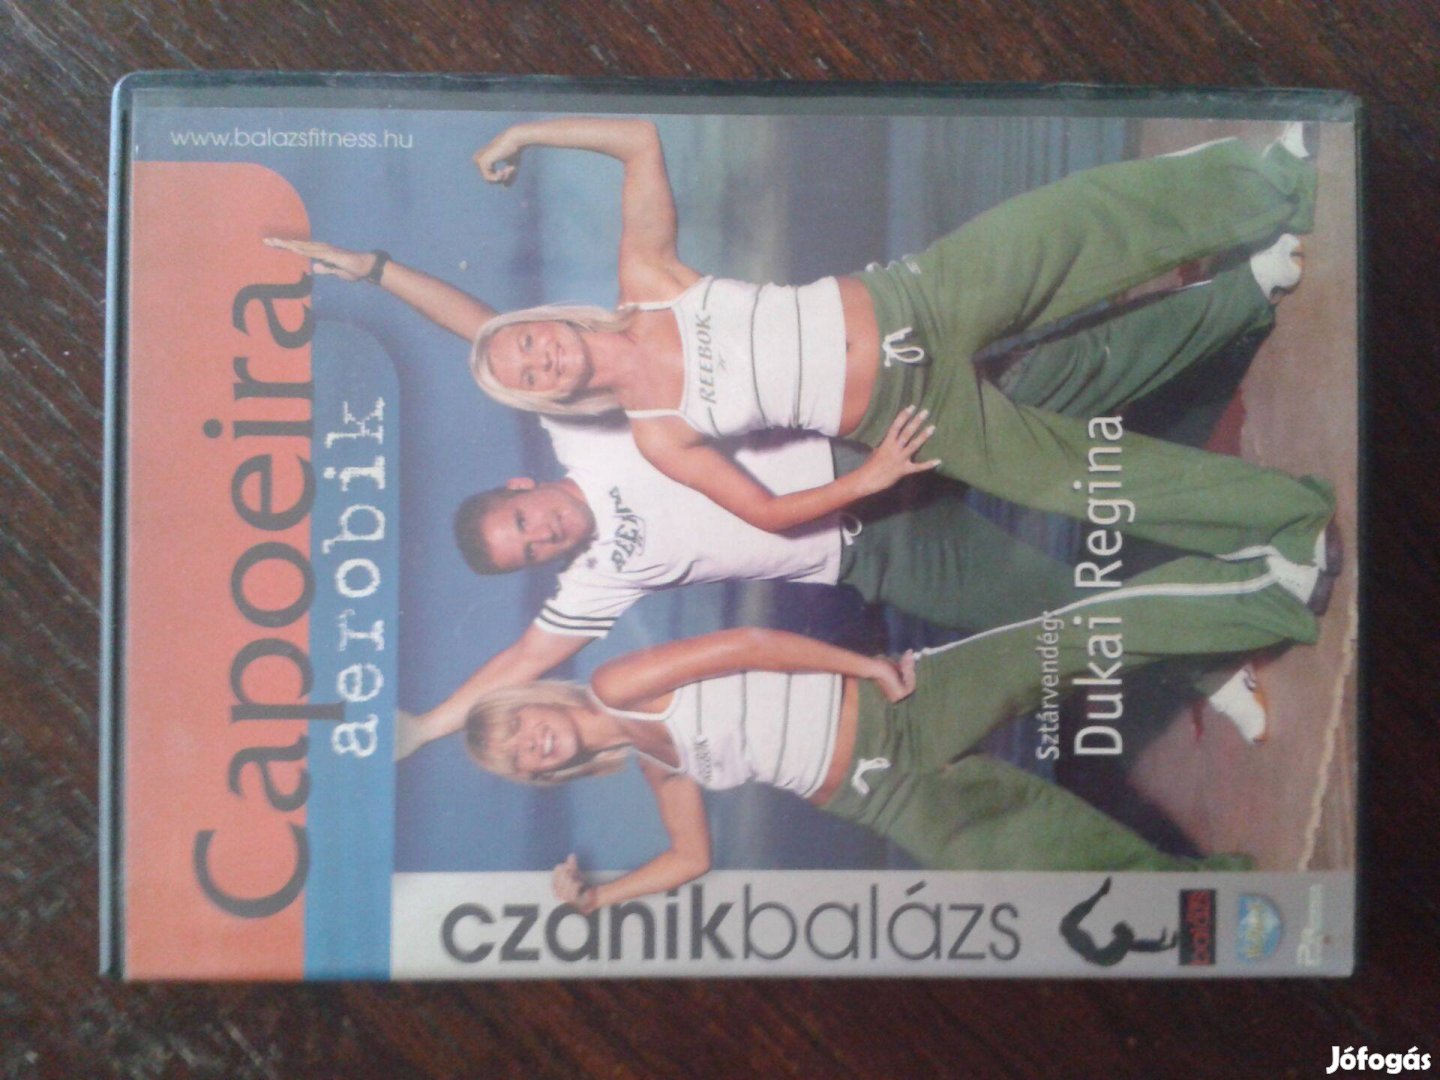 Czanik Balázs-Capoeira DVD